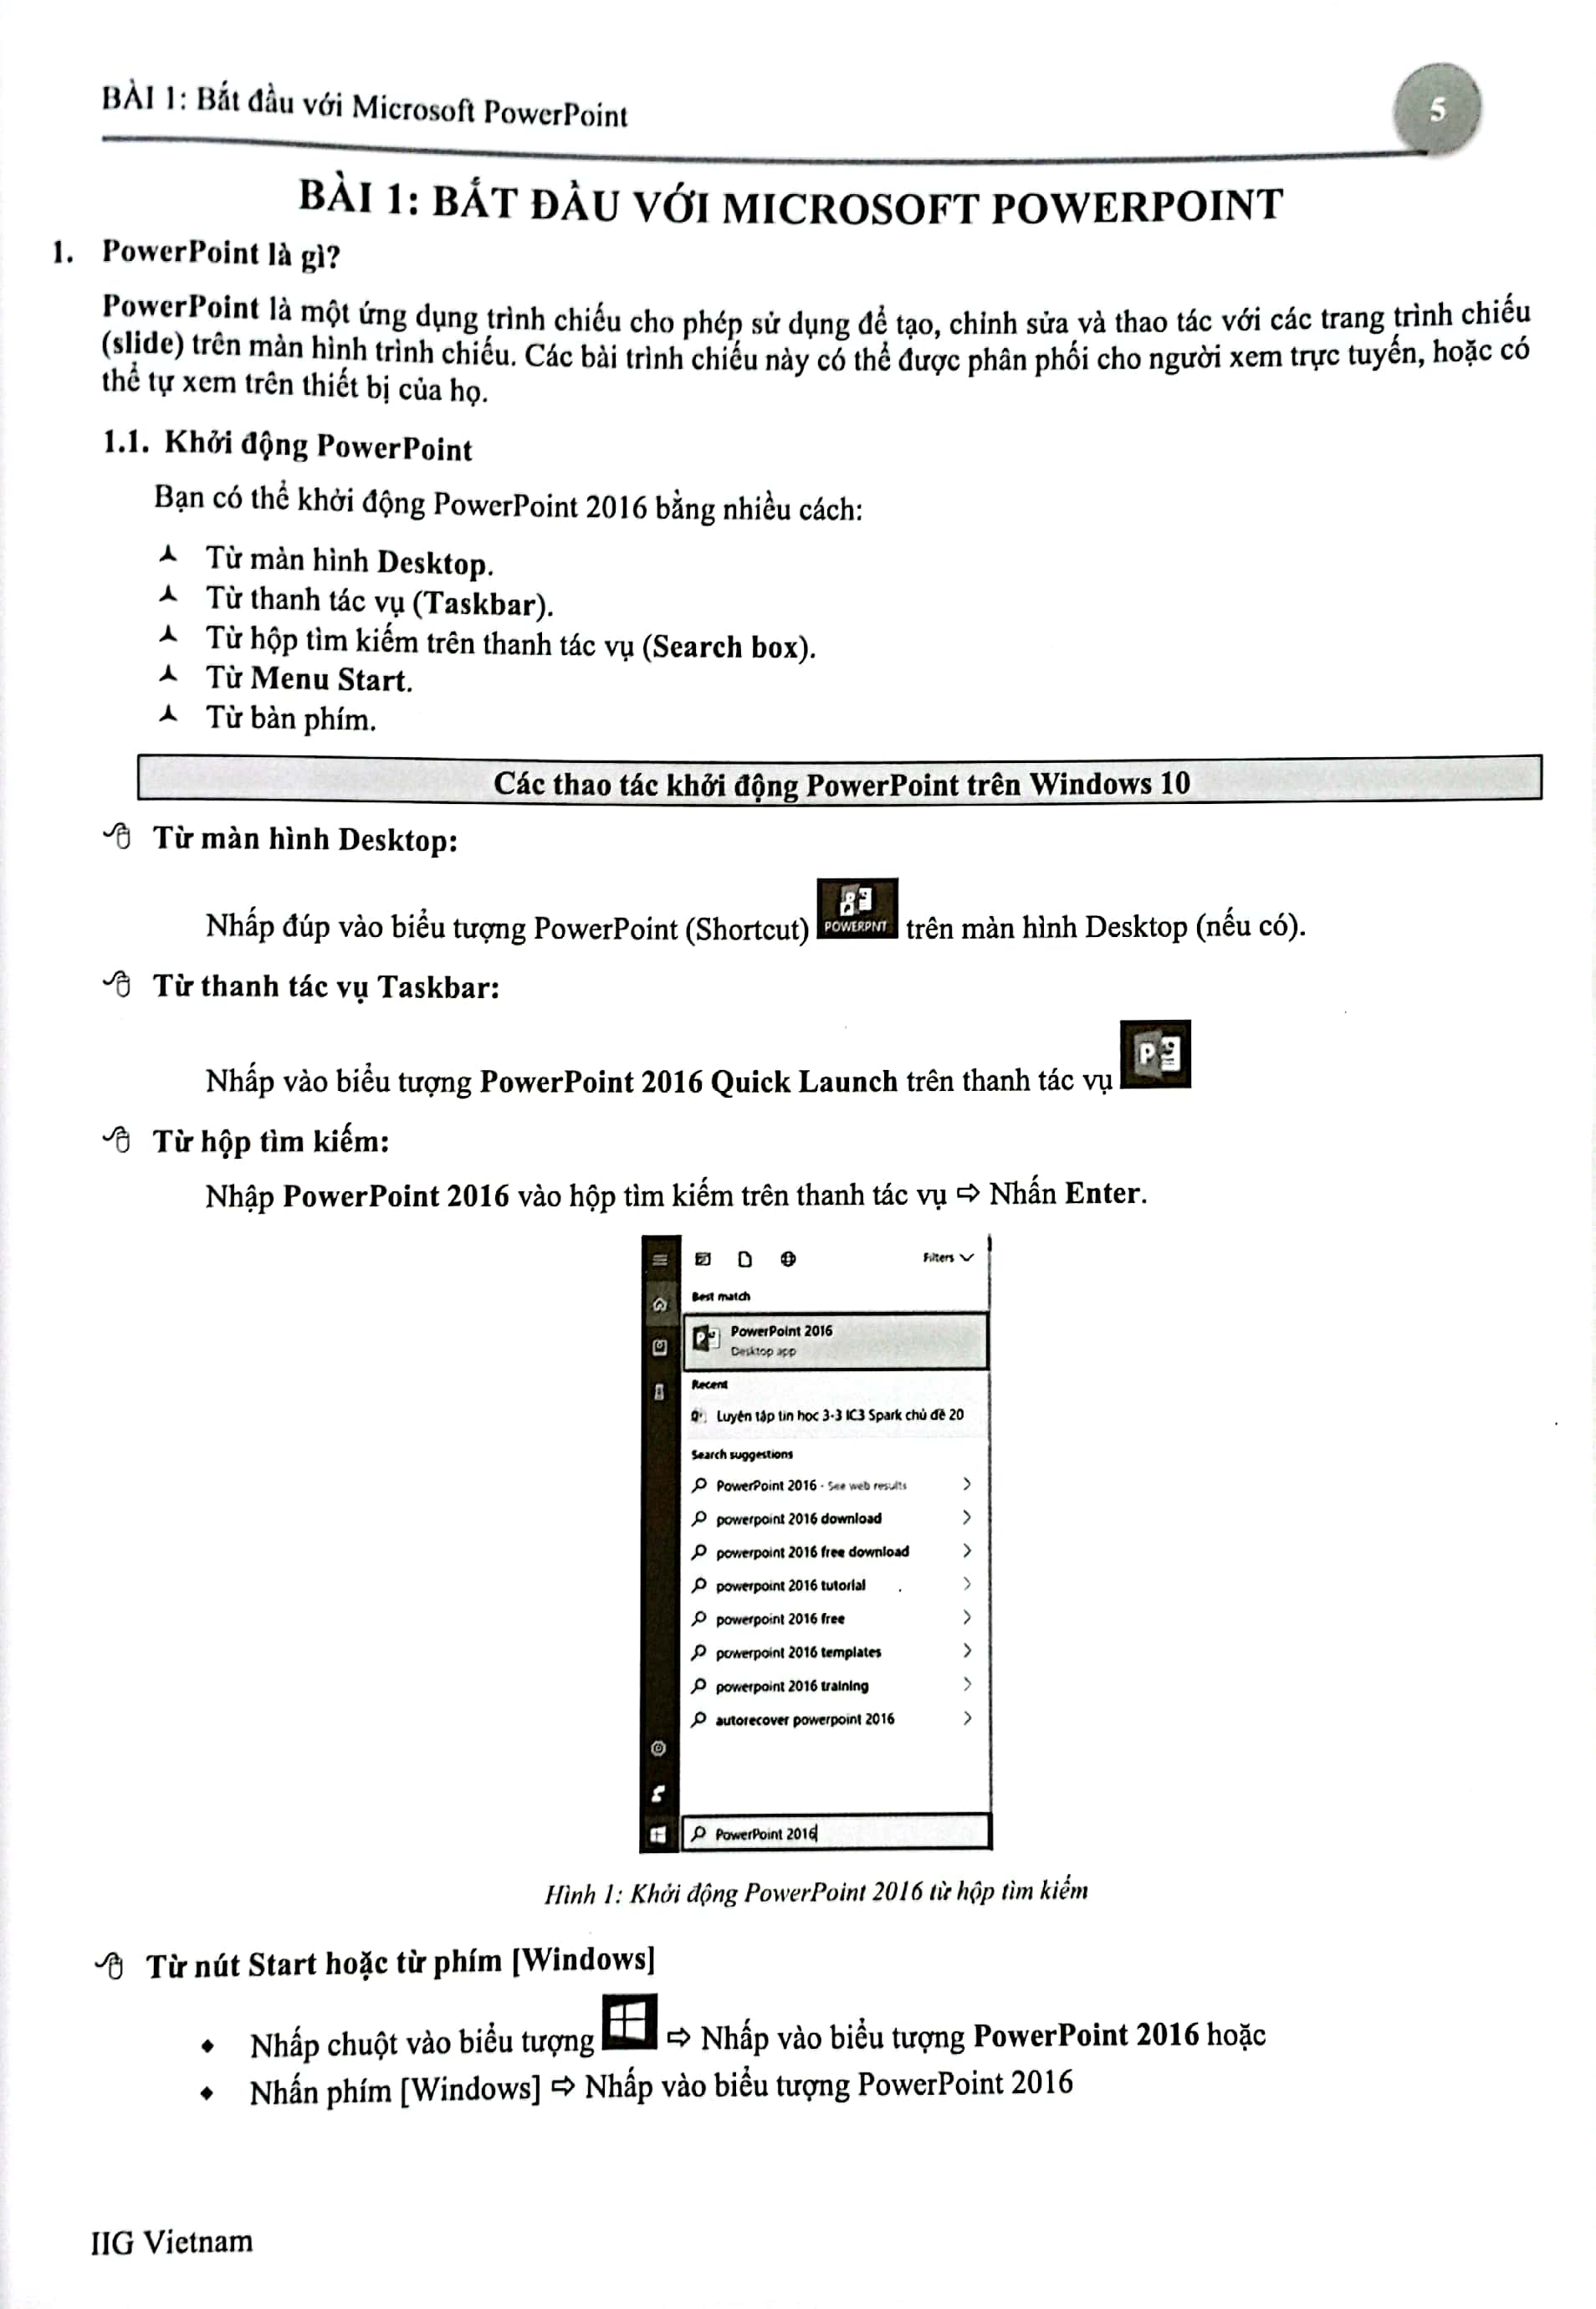 Microsoft Office Powerpoint 2016 PDF